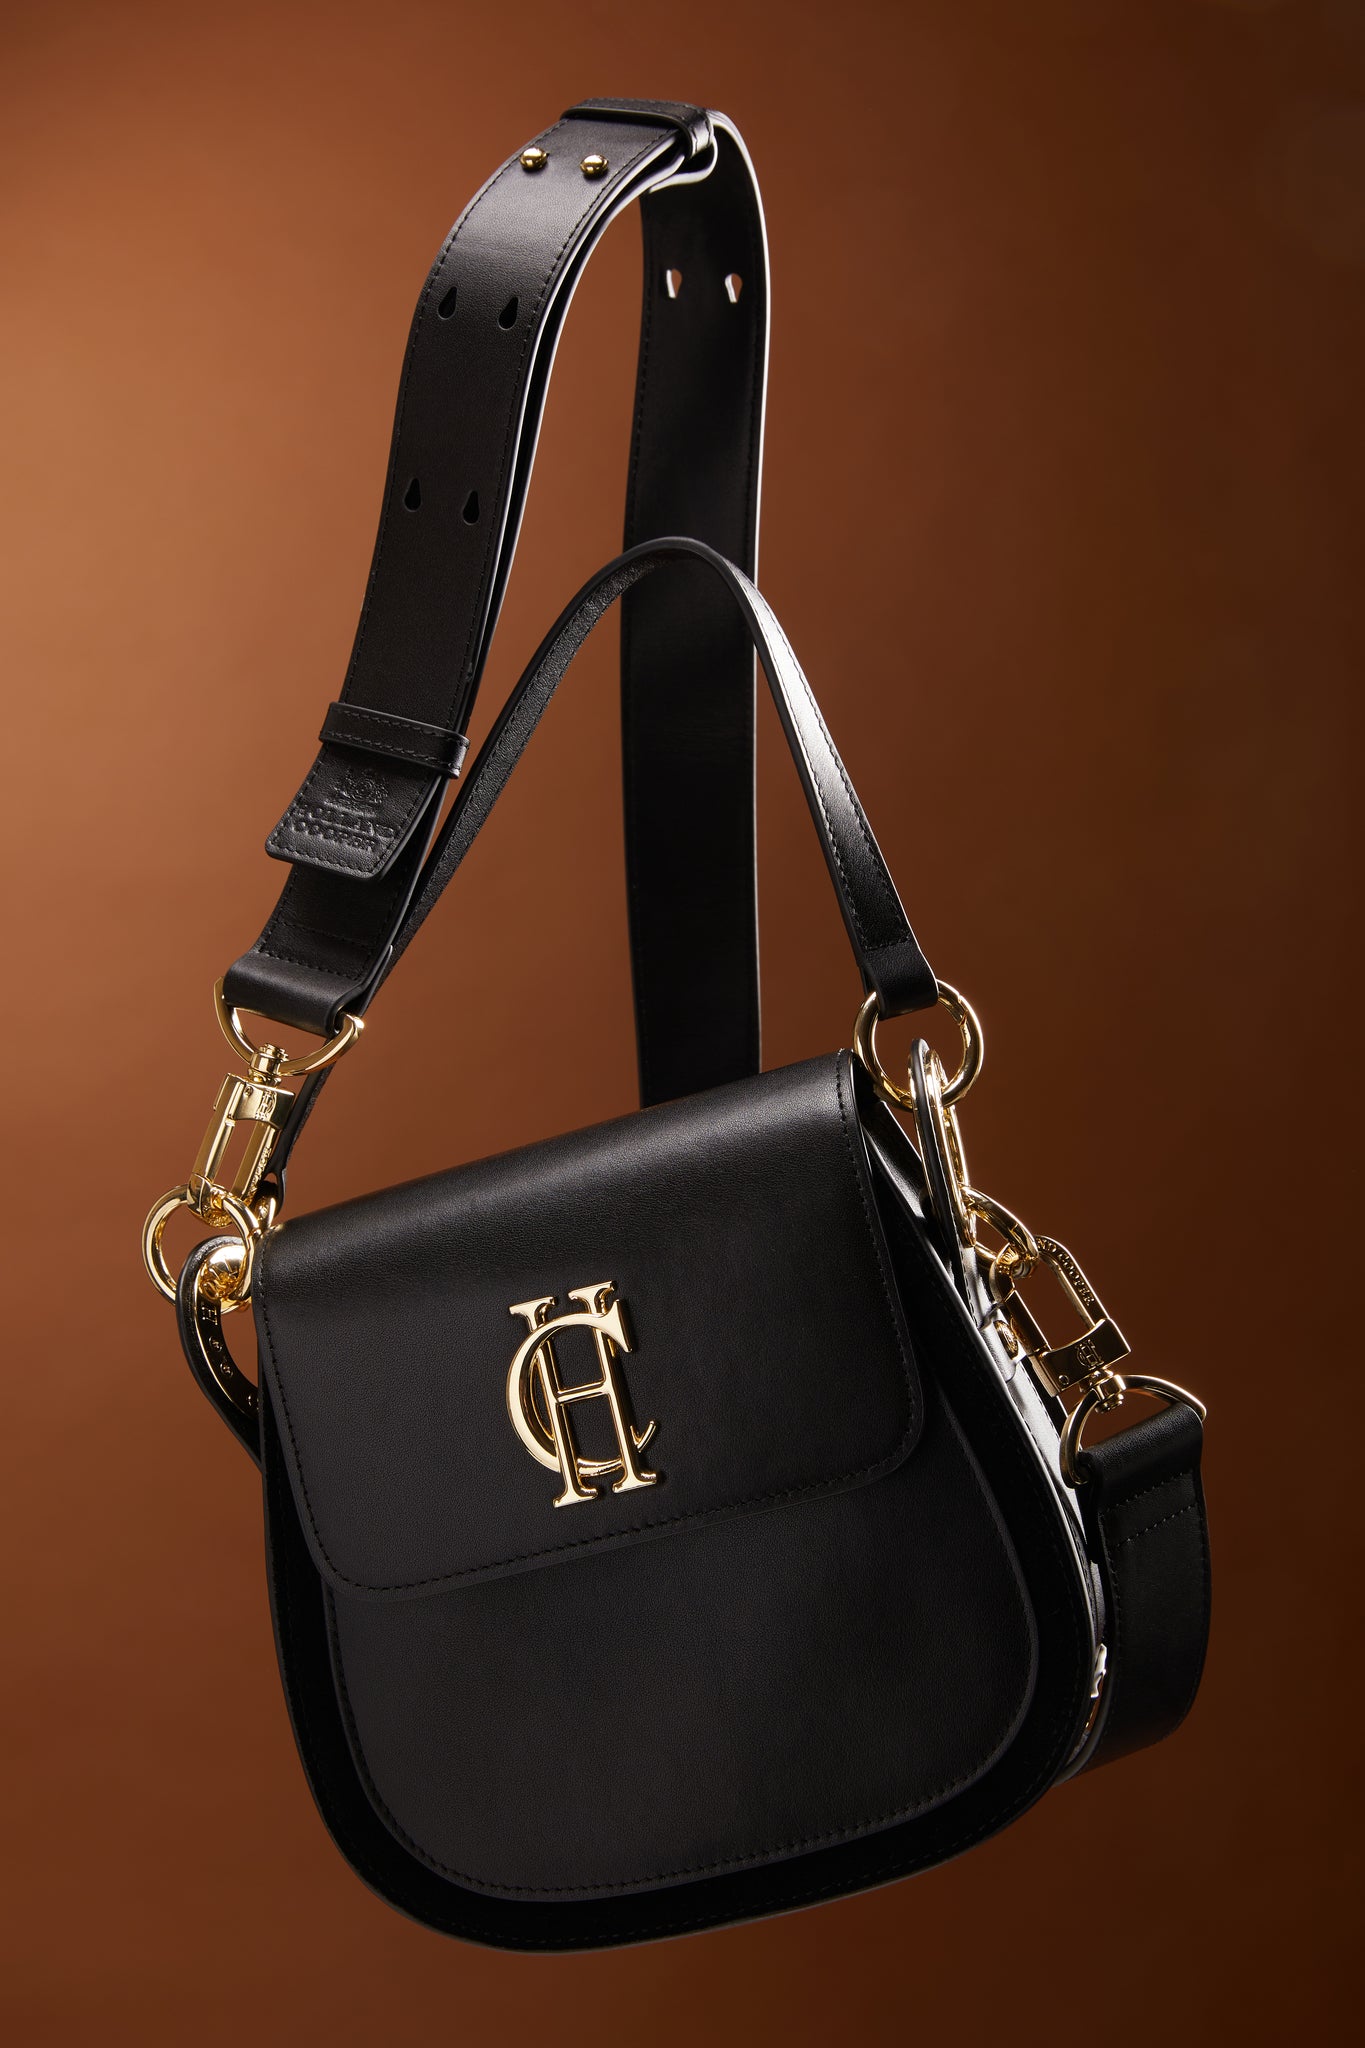 Chelsea Saddle Bag (Chocolate)